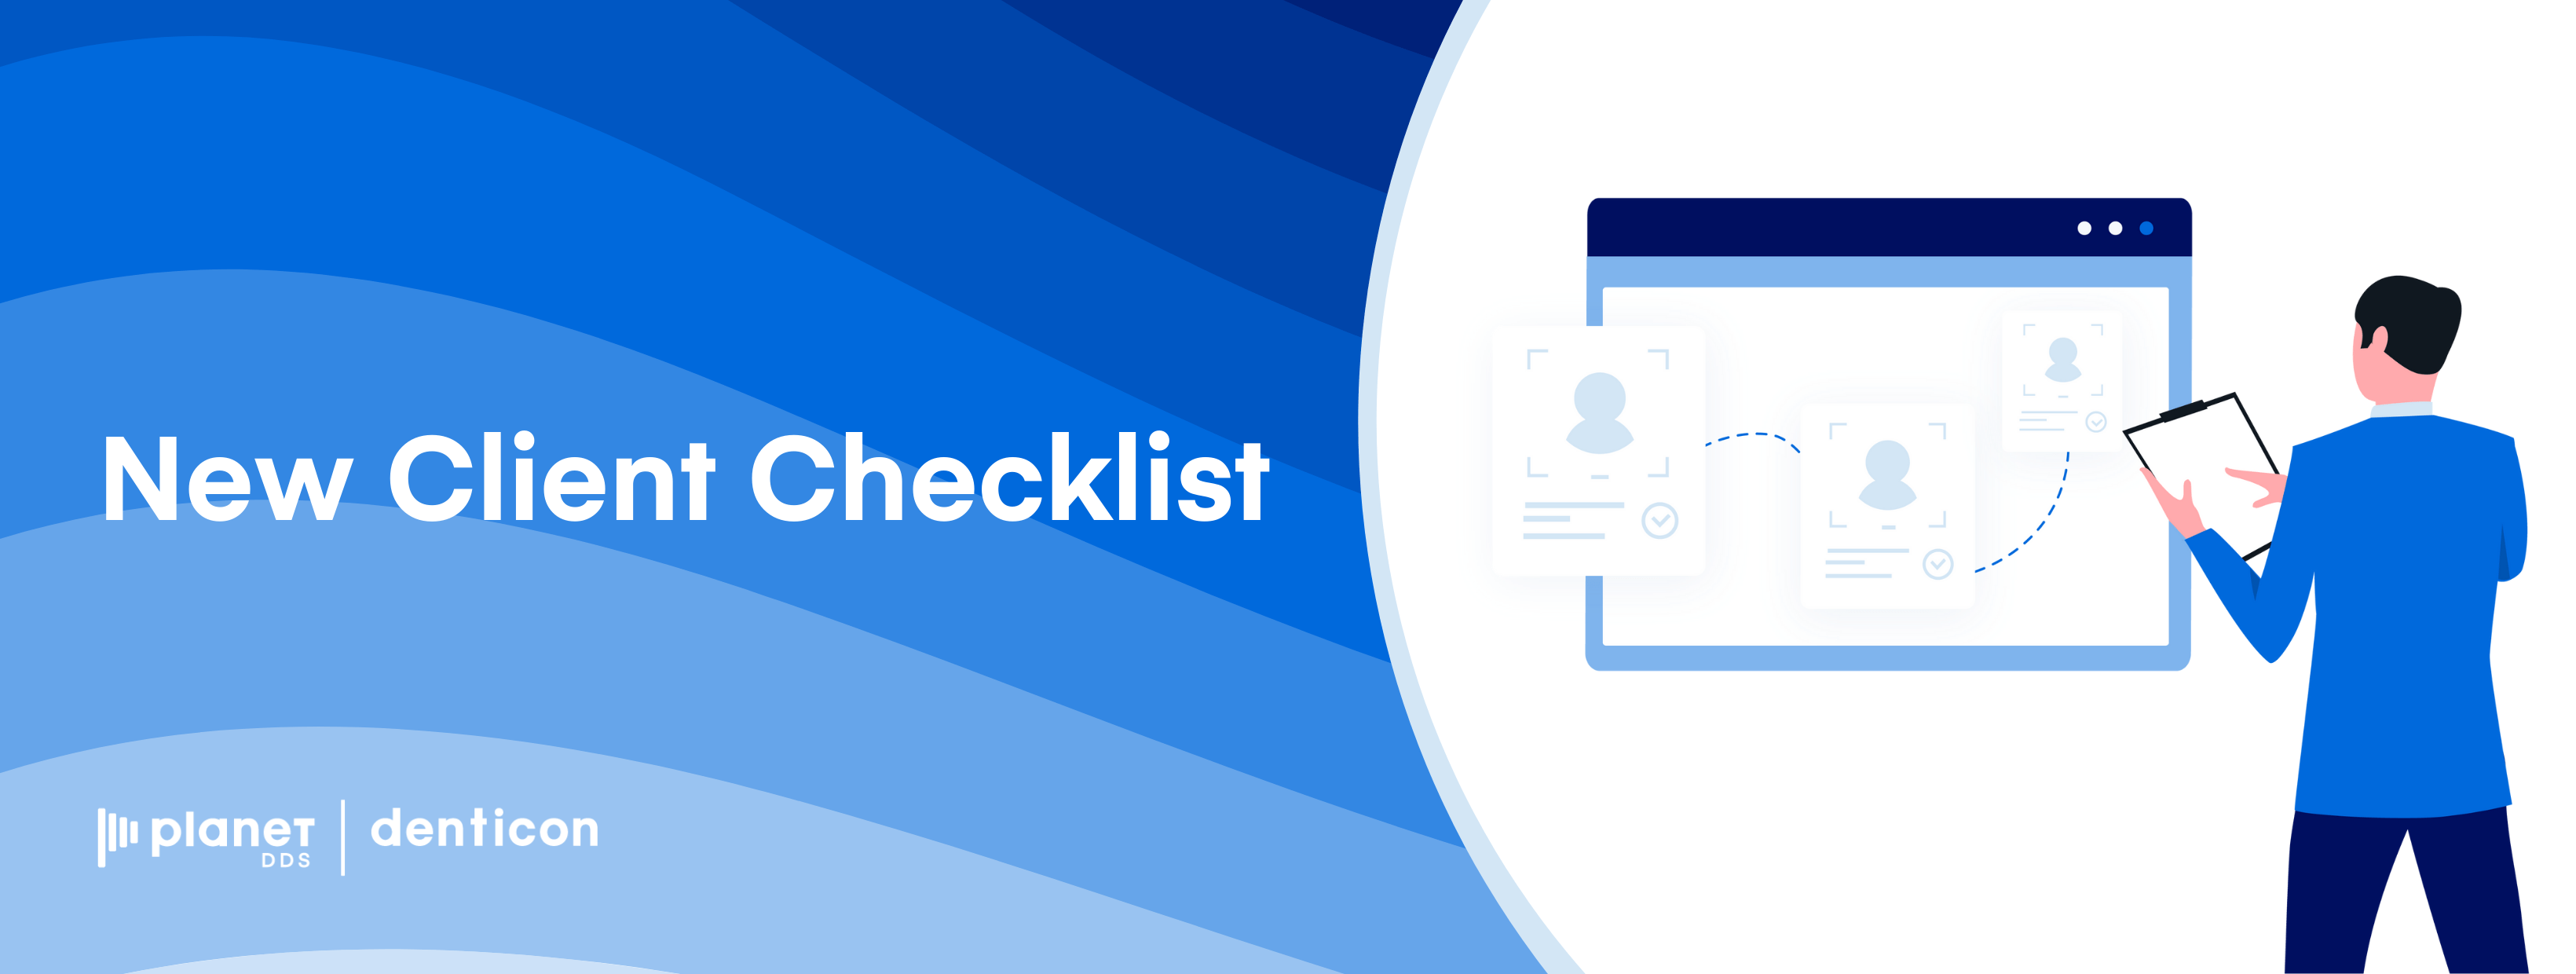 New Client Checklist Image